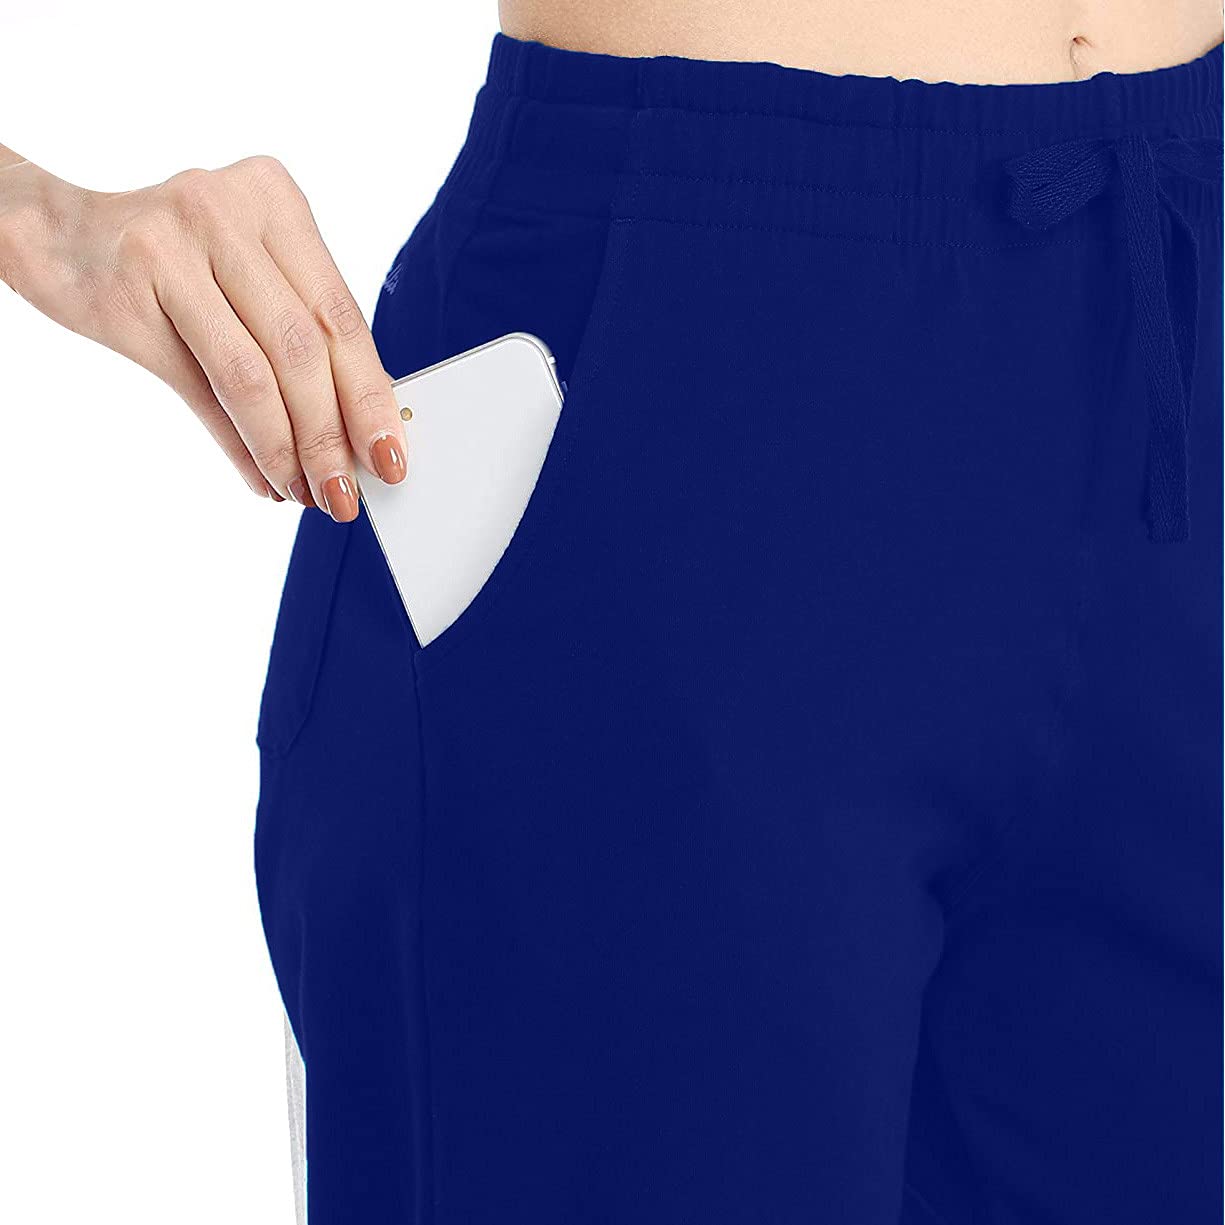 Bravetoshop Women's Athletic Shorts Workout Yoga Shorts Casual Summer Elastic Waist Knee Length Shorts with Pockets (Dark Blue,XXL)